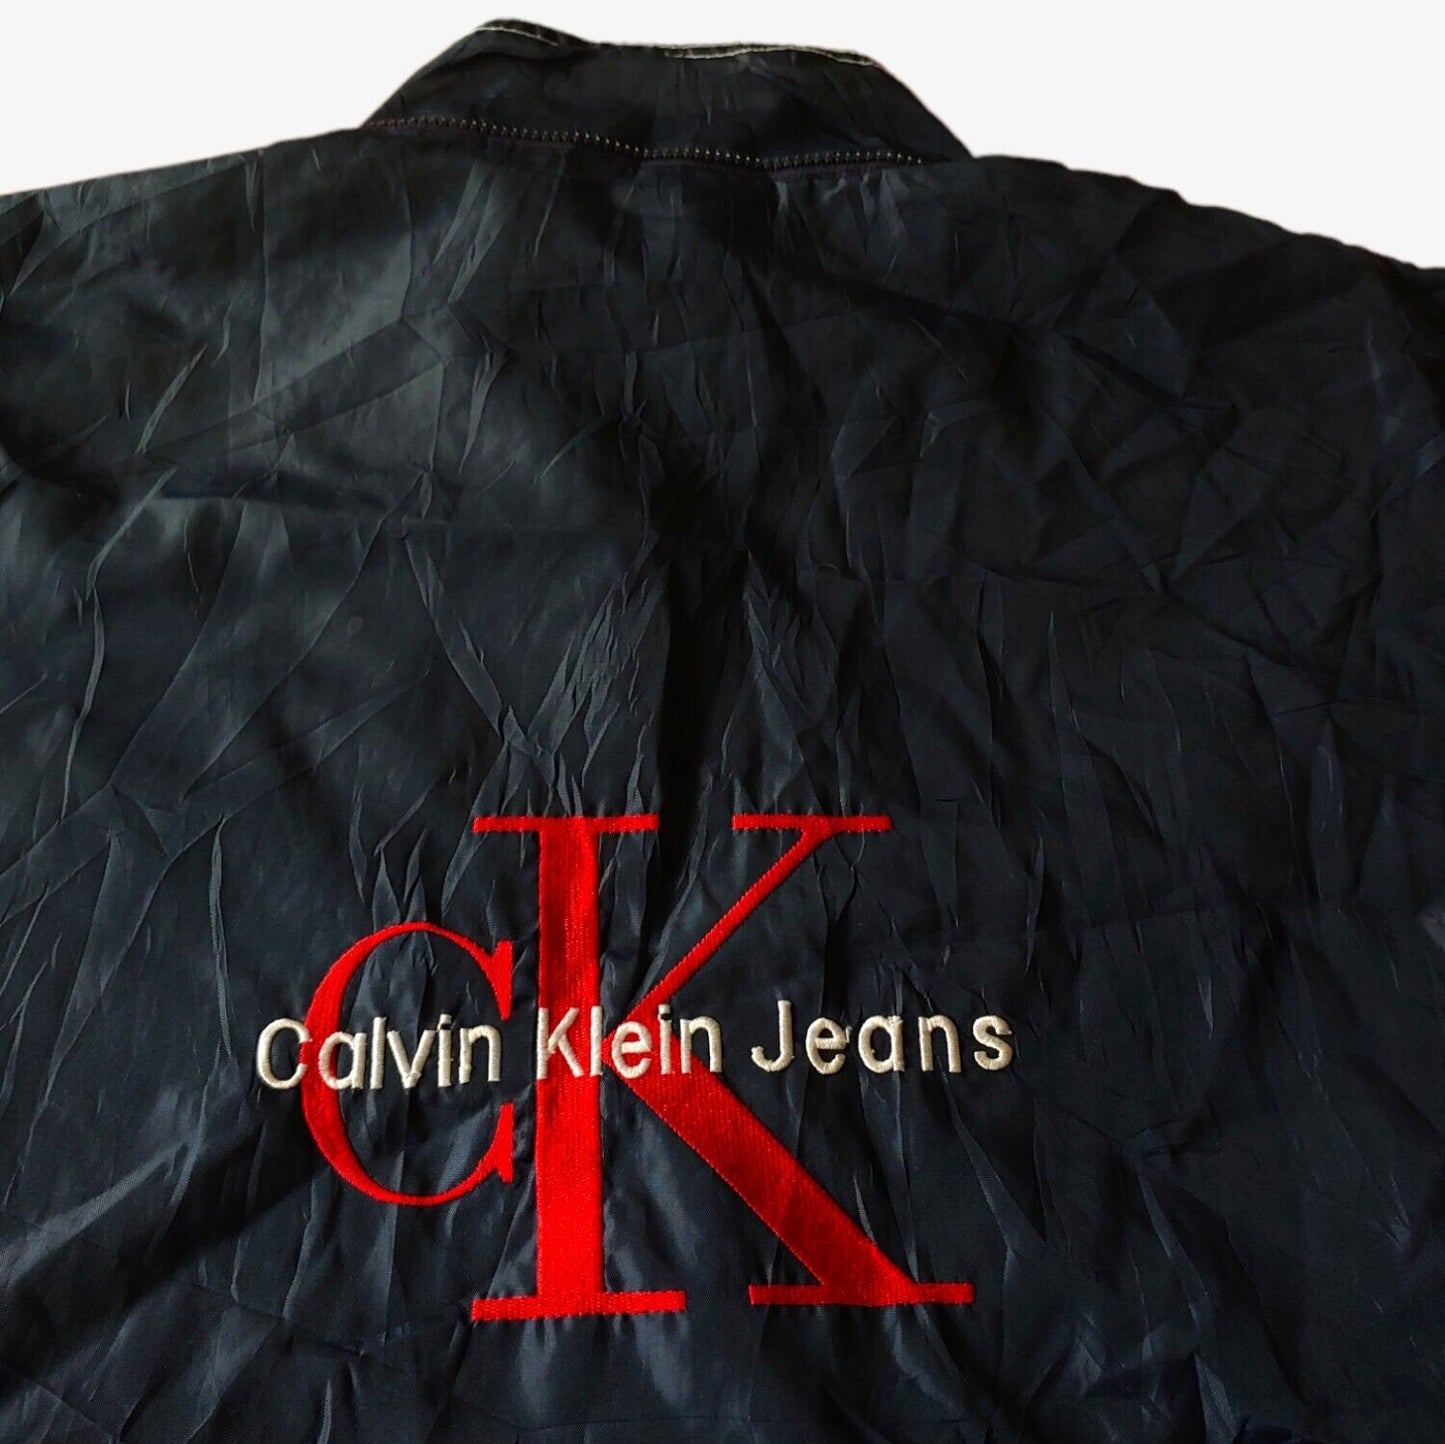 Vintage 1990s Calvin Klein Jeans CK Tape Logo Jacket Gilet With Removable Arms Back Logo - Casspios Dream